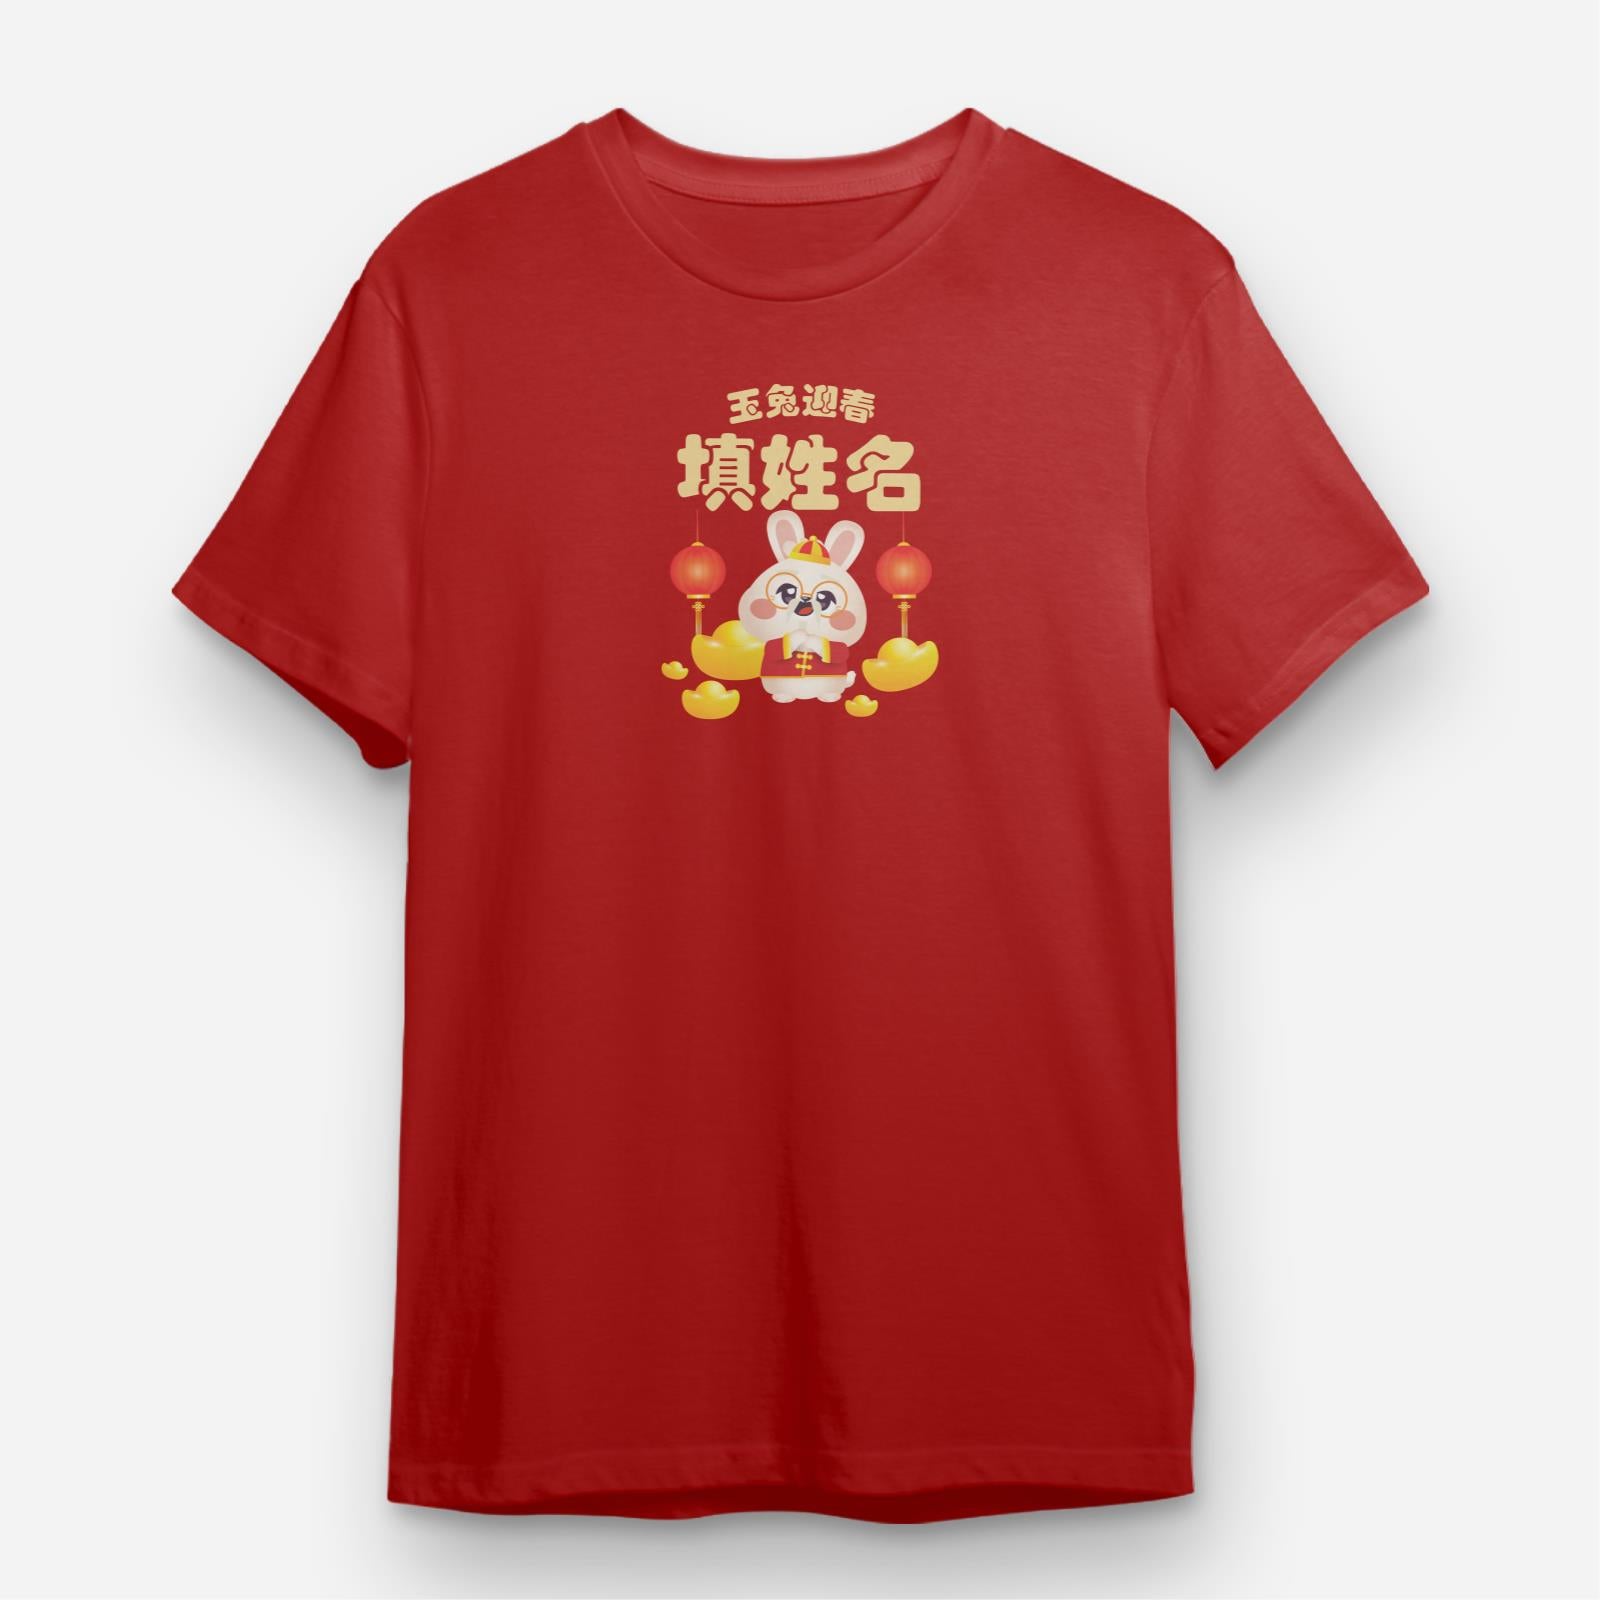 Cny Rabbit Family - Grandpa Rabbit Unisex Tee Shirt with Chinese Personalization